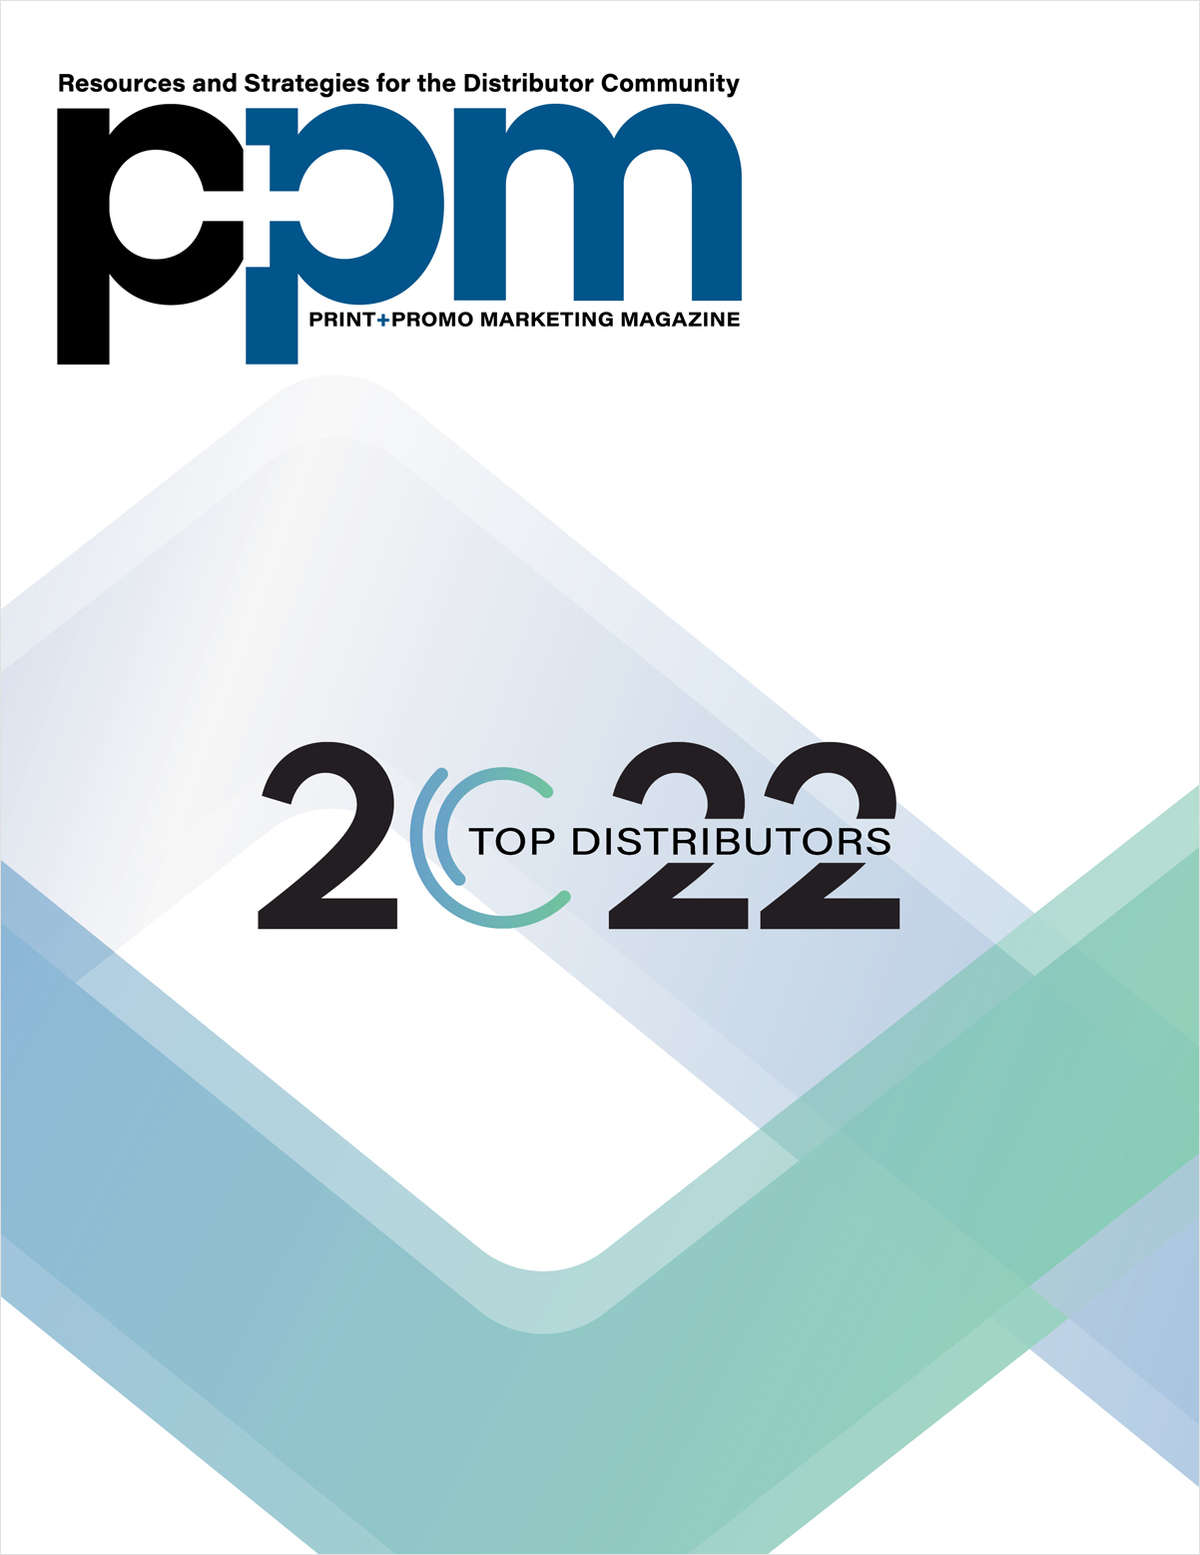 The Print+Promo Marketing 2022 Top Distributors List